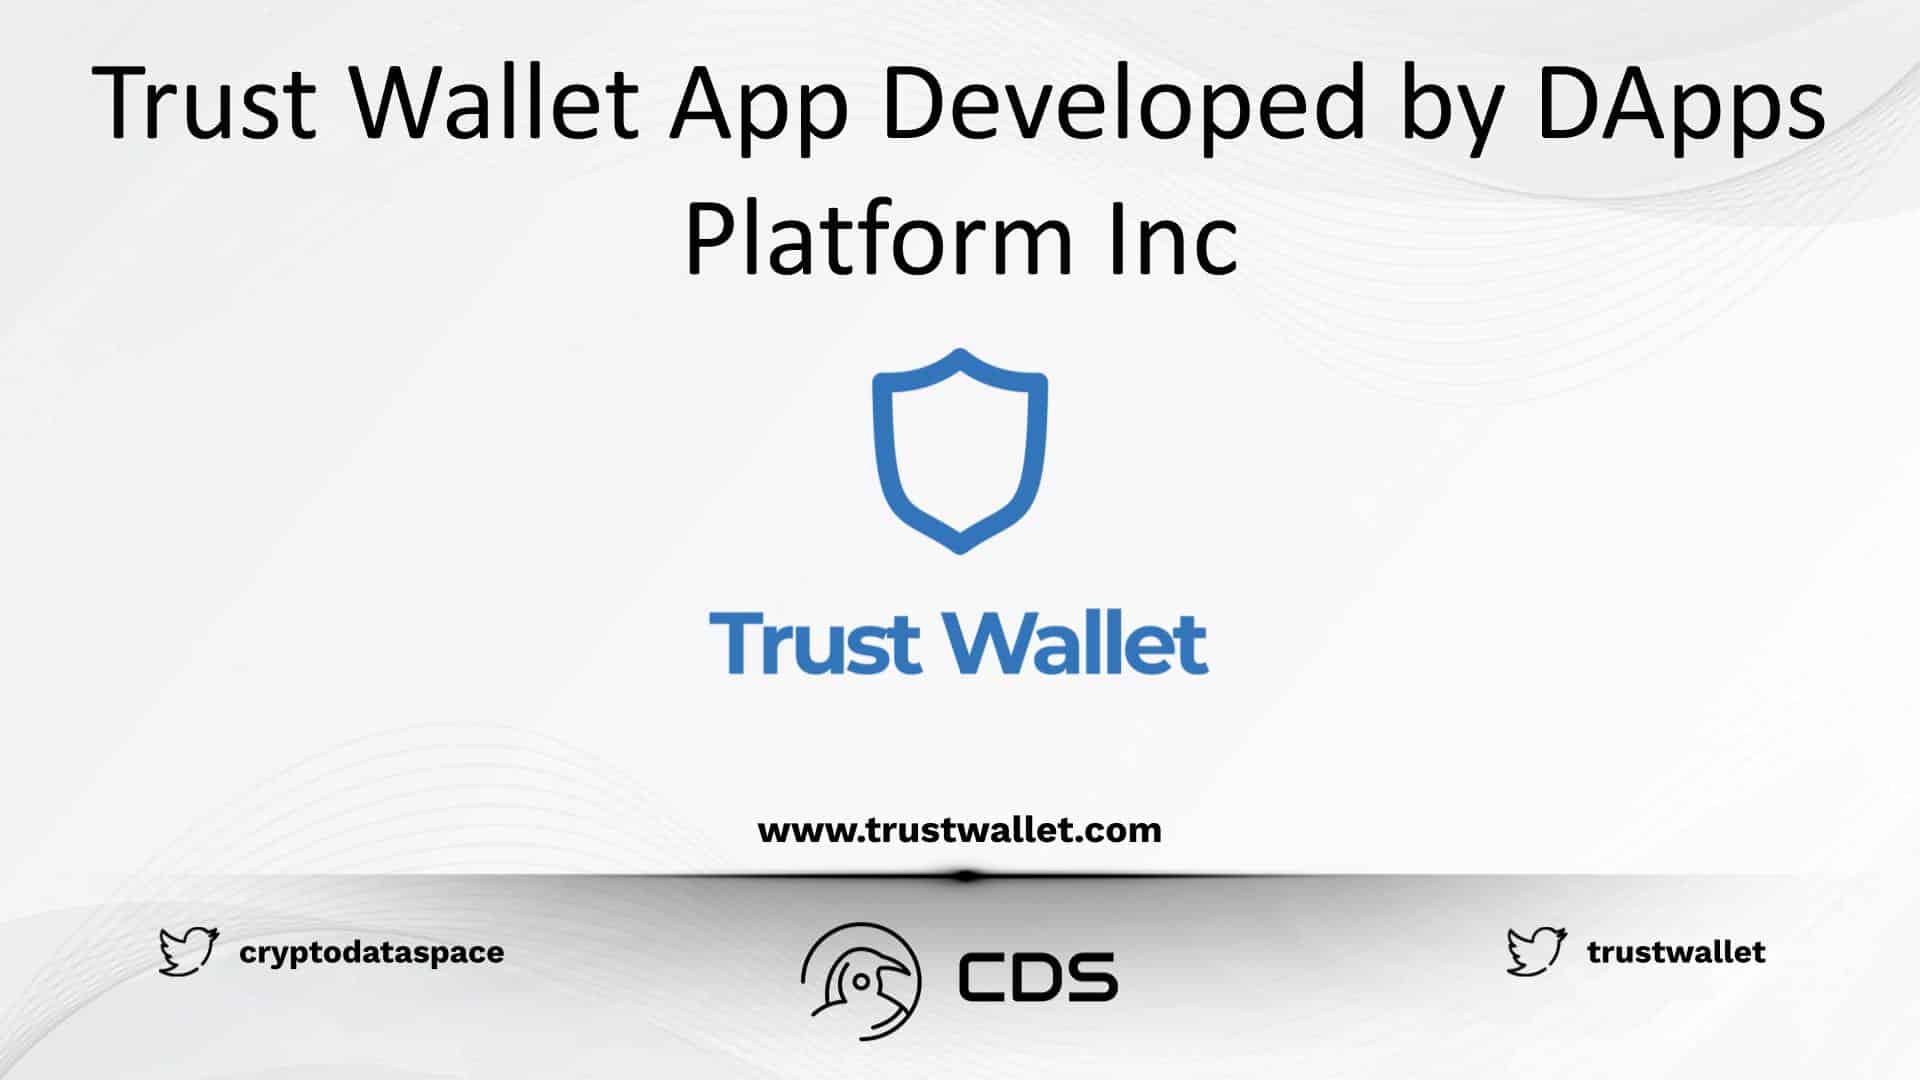 Trust Wallet App Developed by Dapps Platform Inc